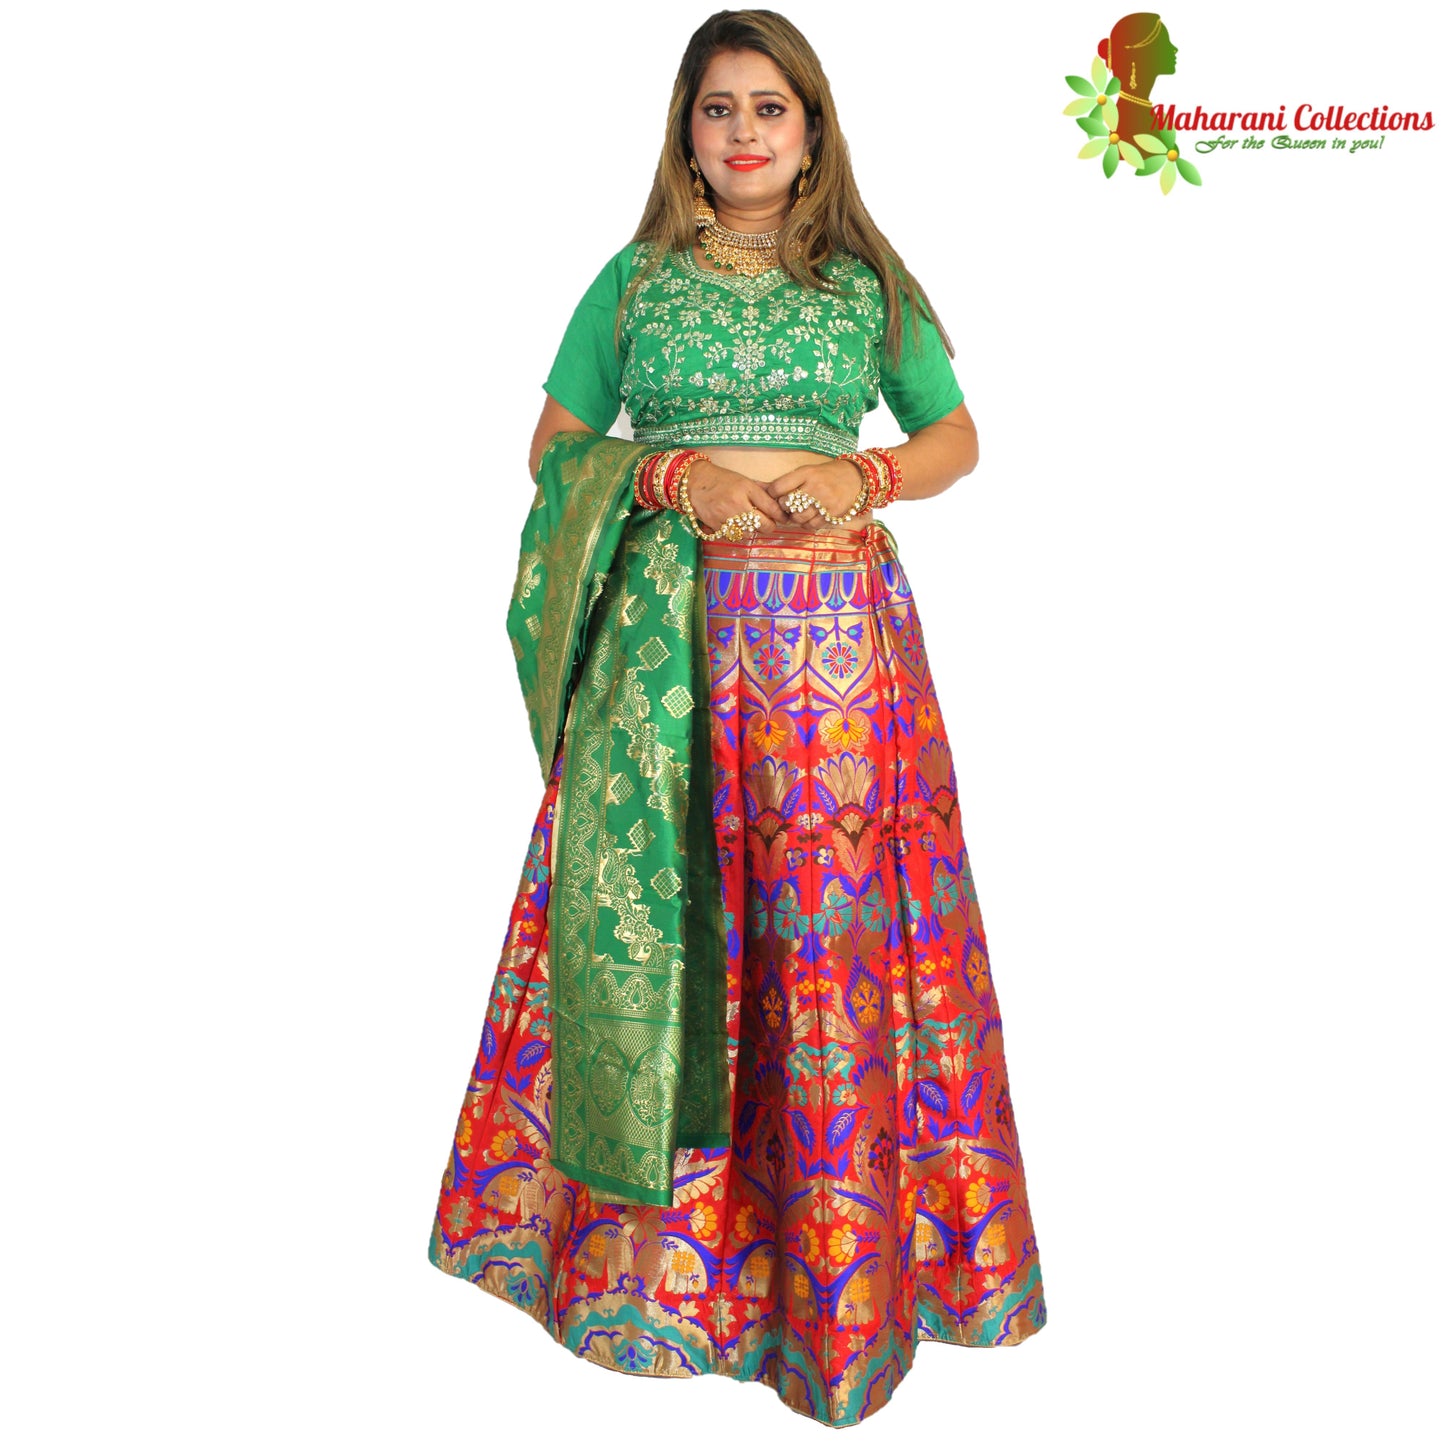 Maharani's Designer Pure Banarasi Silk Lehenga - Green, Yellow and Red (M/L)